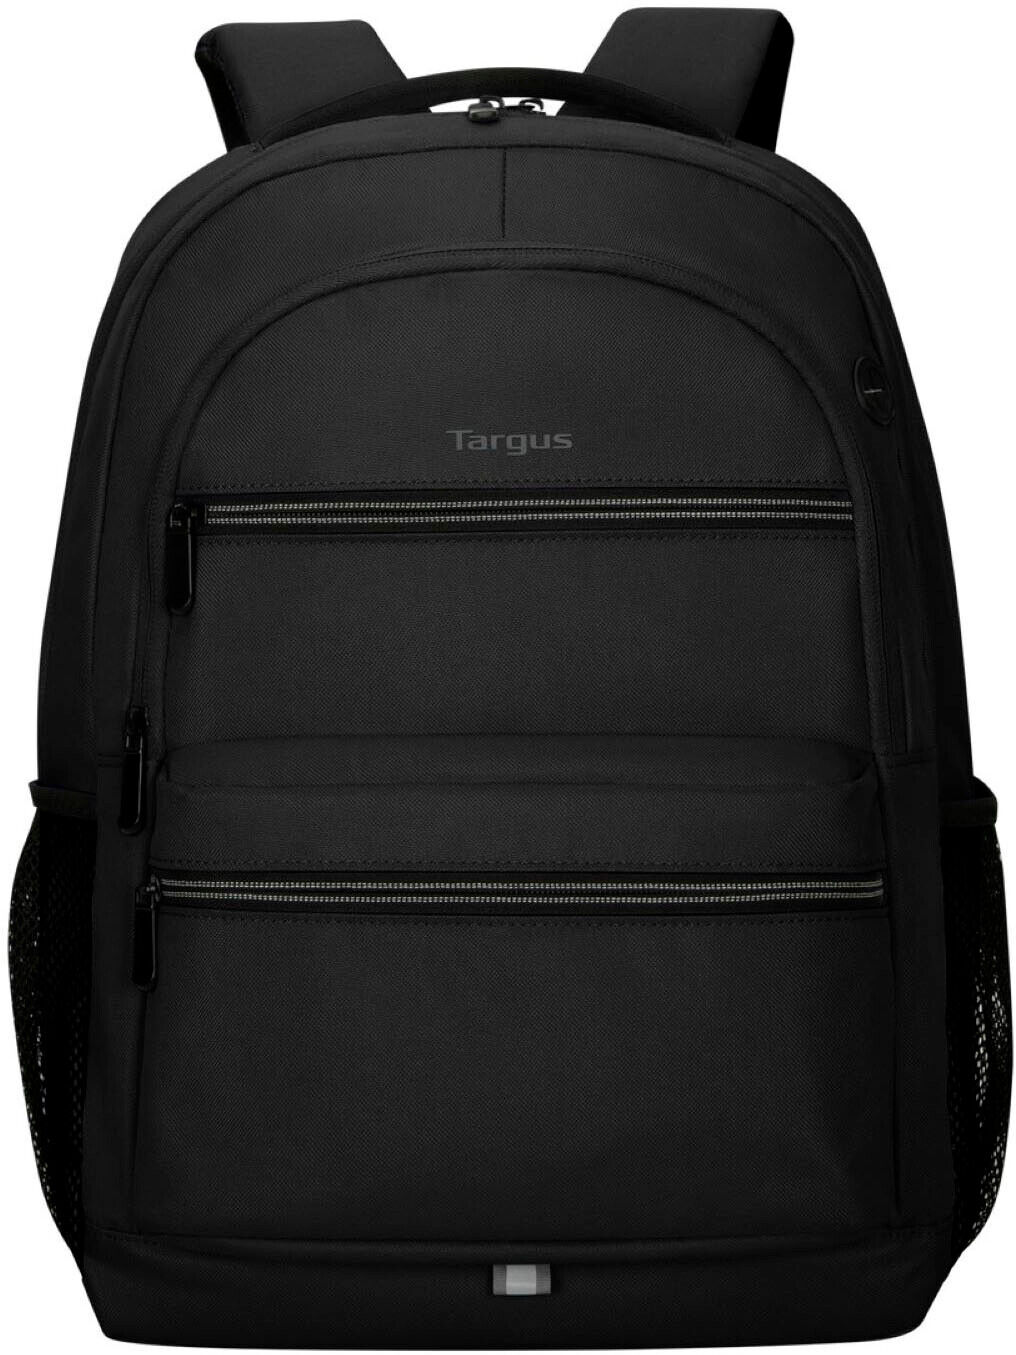 Targus Octave II Backpack for 15.6” Laptops (Black or Blue)